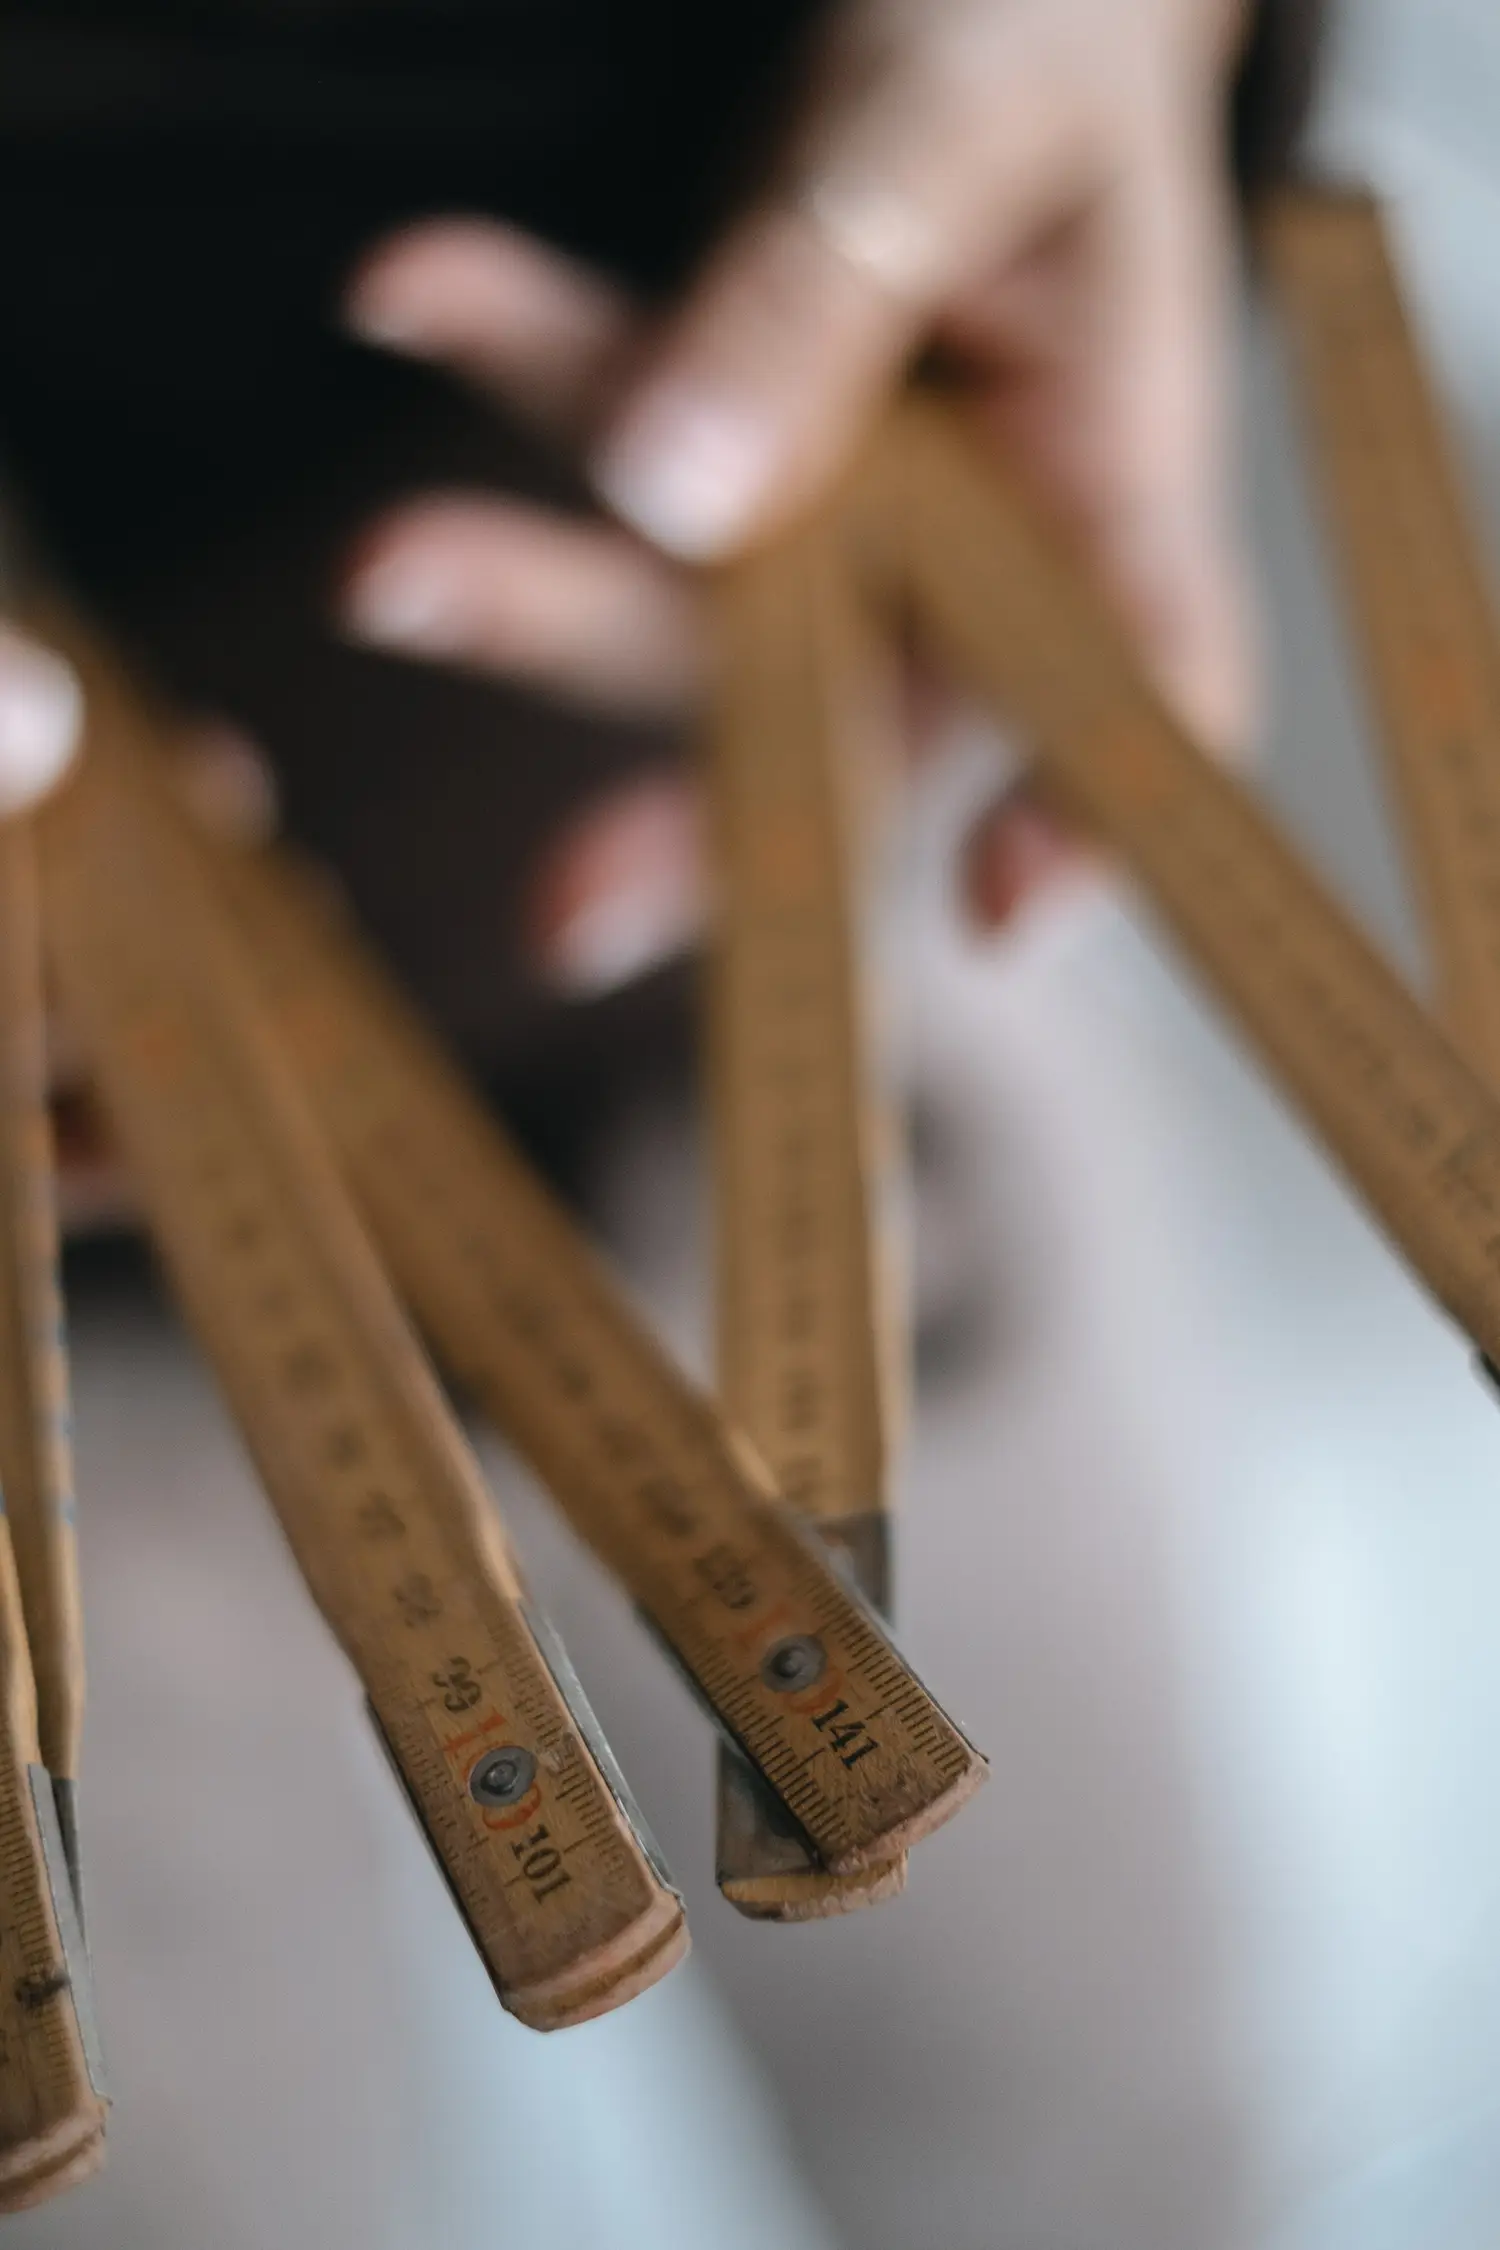 Stefania Luraghi's hands hold a carpenter's tape measure, symbolizing her interior design work.